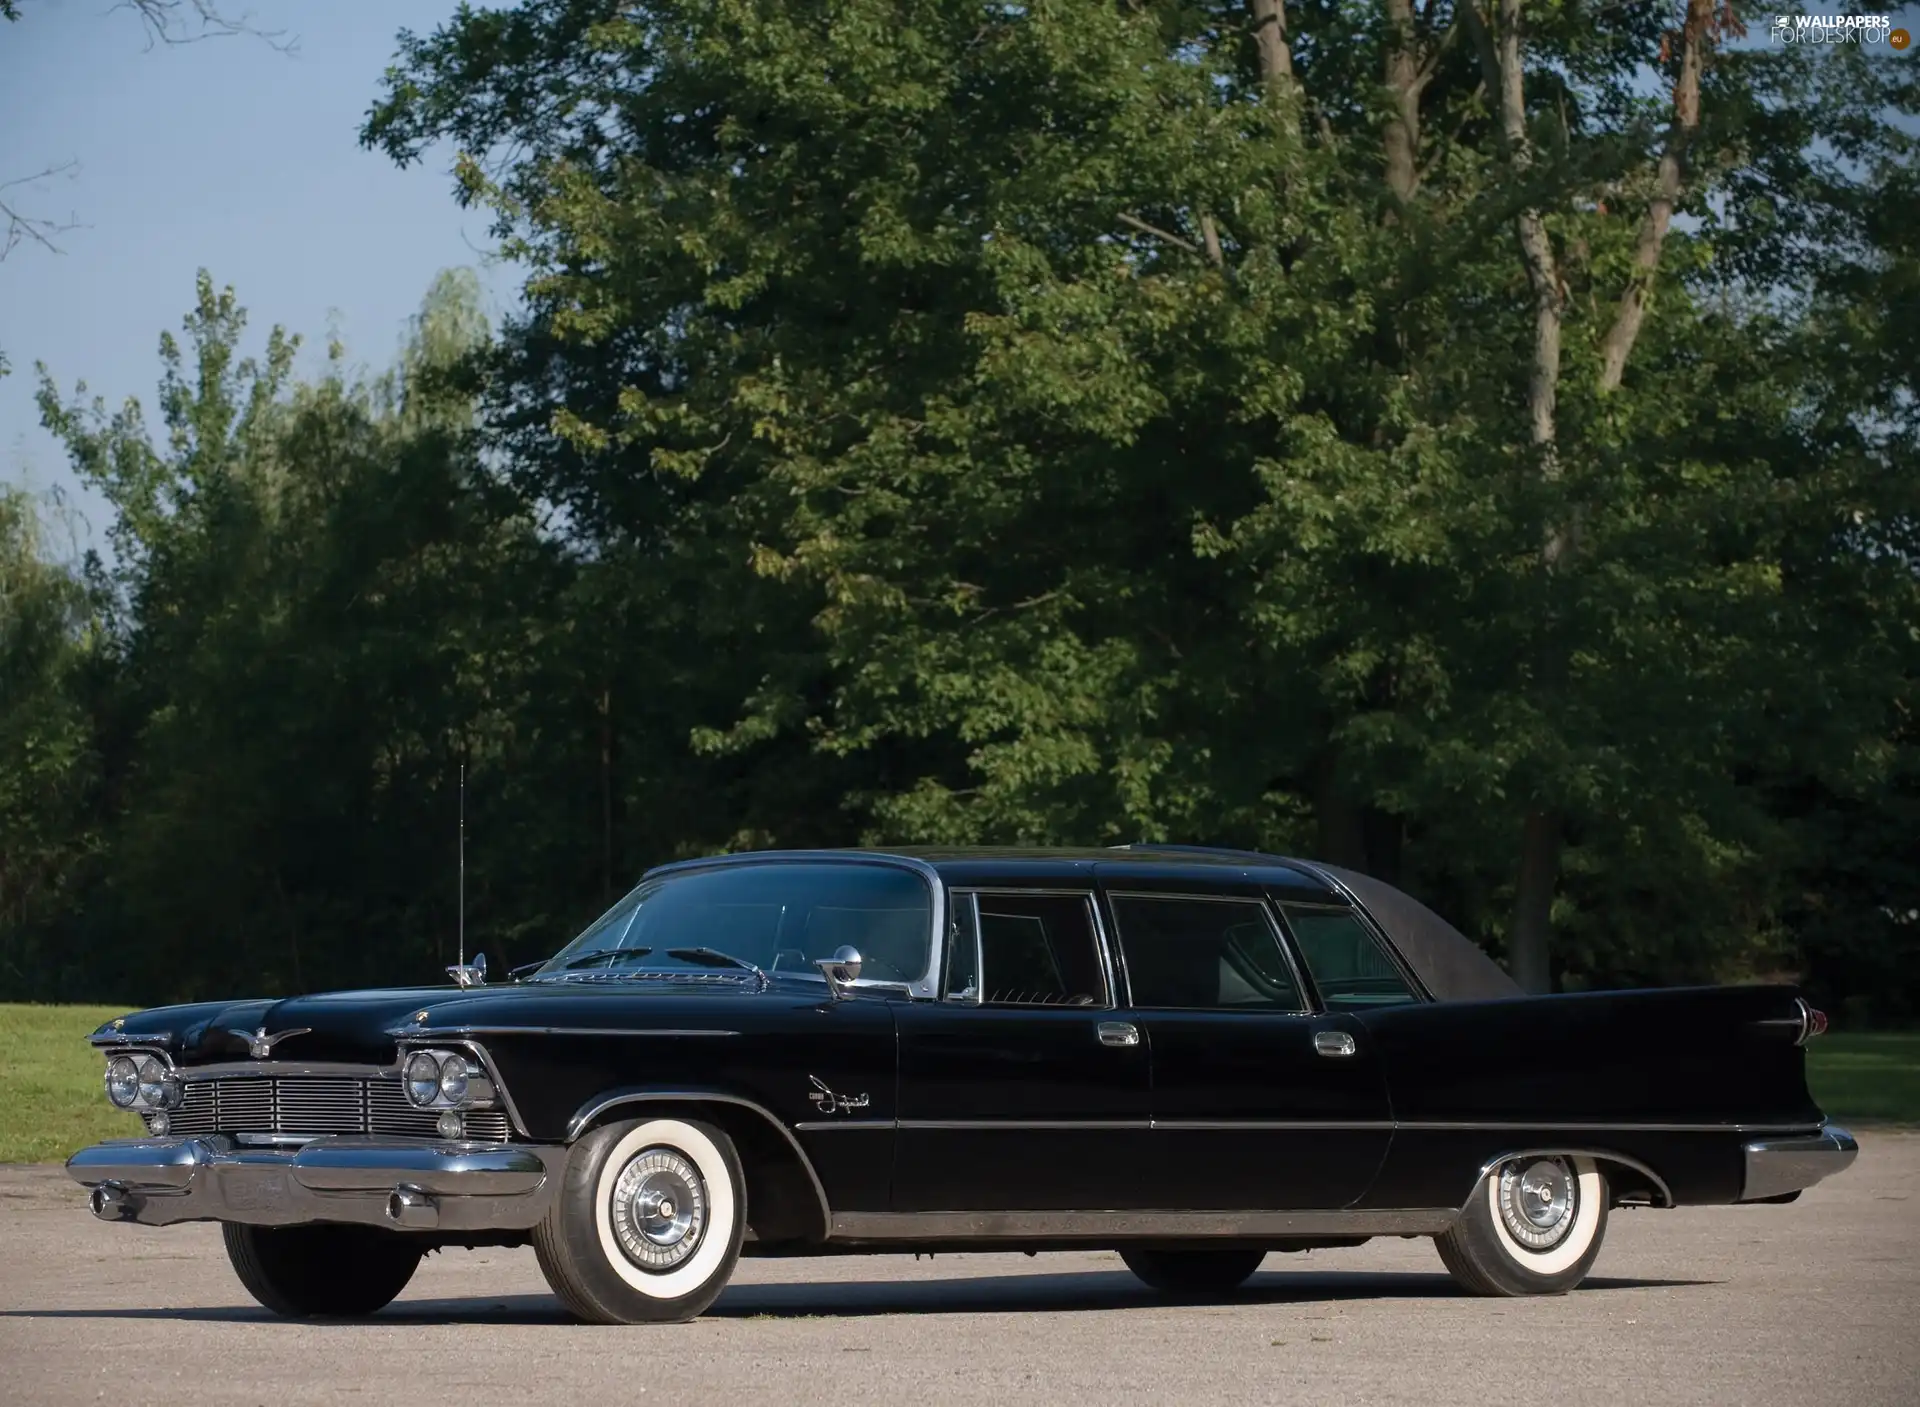 The historic car, Chrysler, Limousine